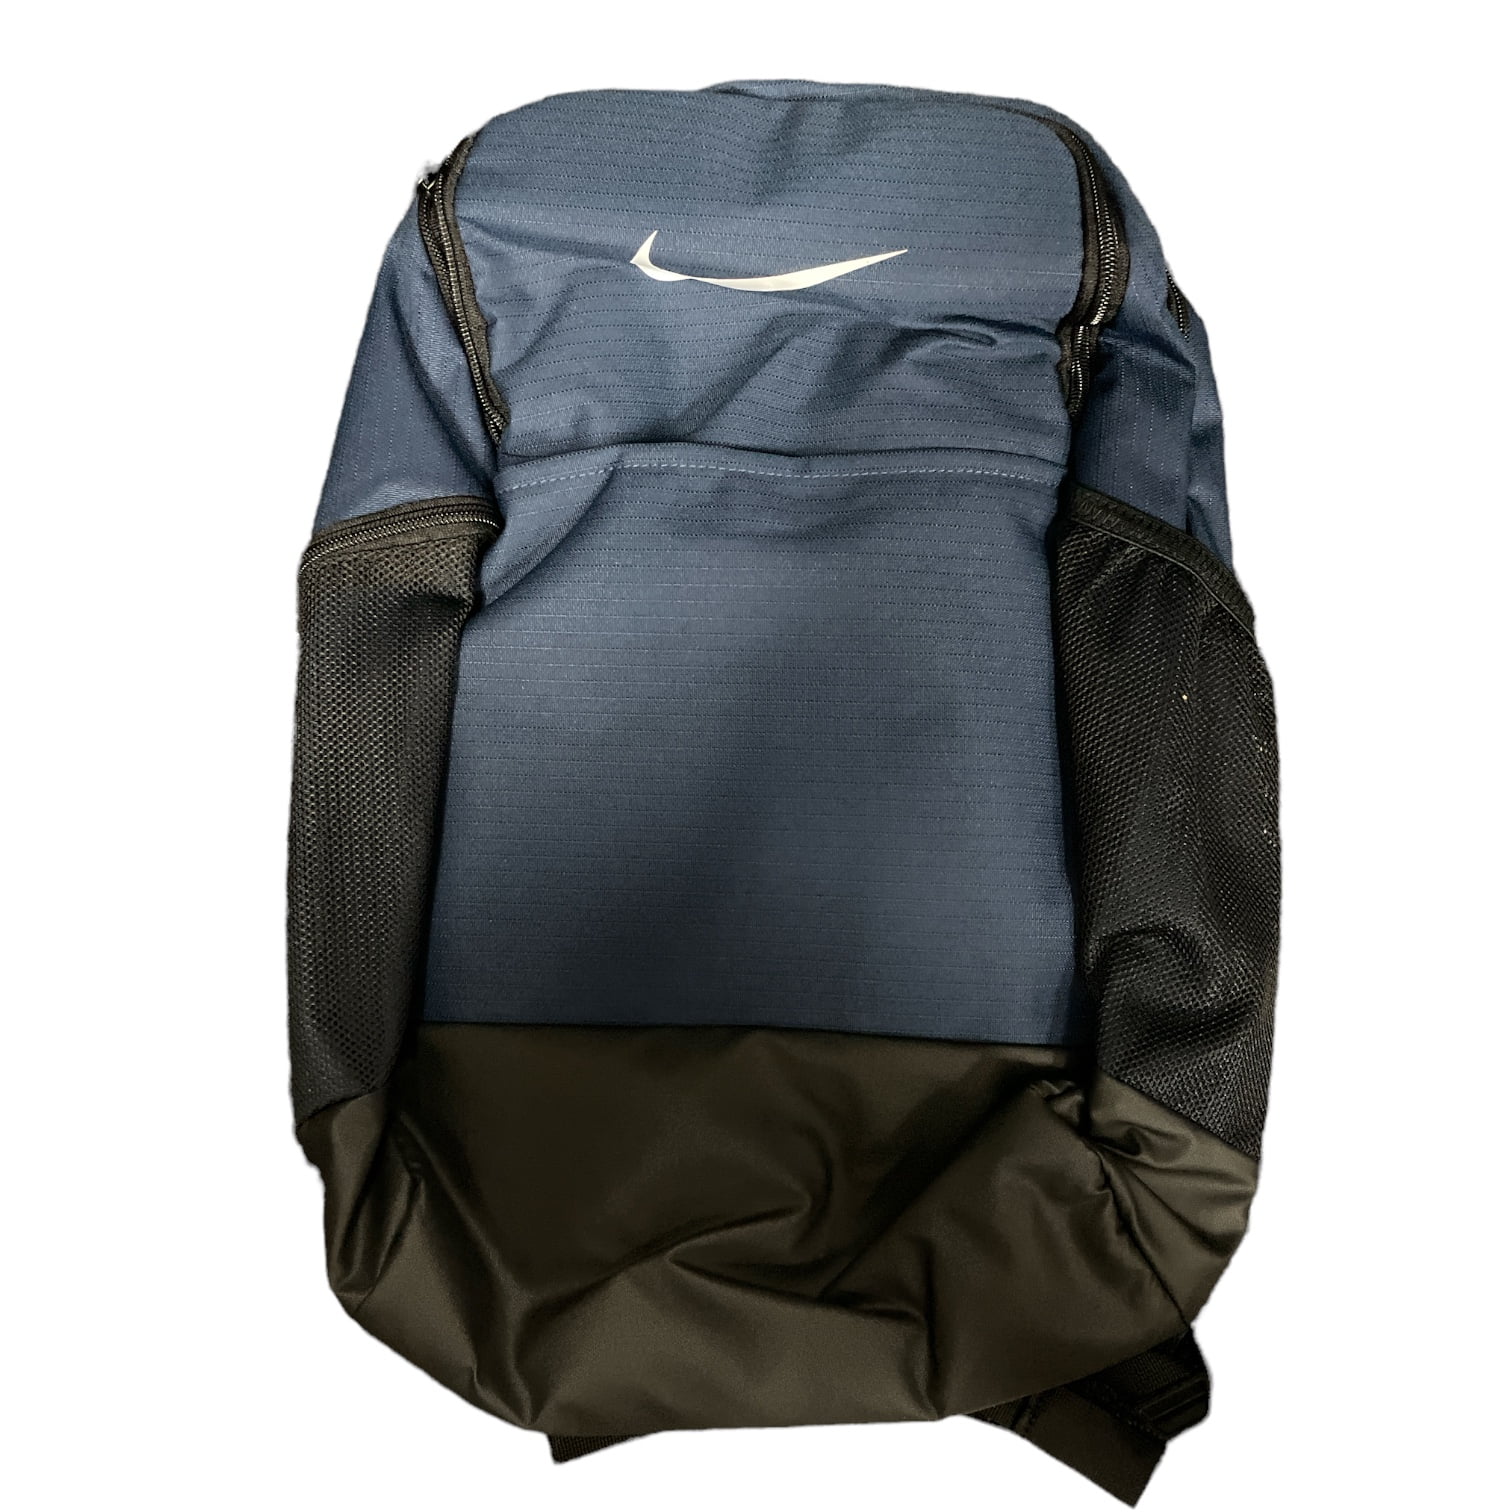  Nike Brasilia Medium Backpack